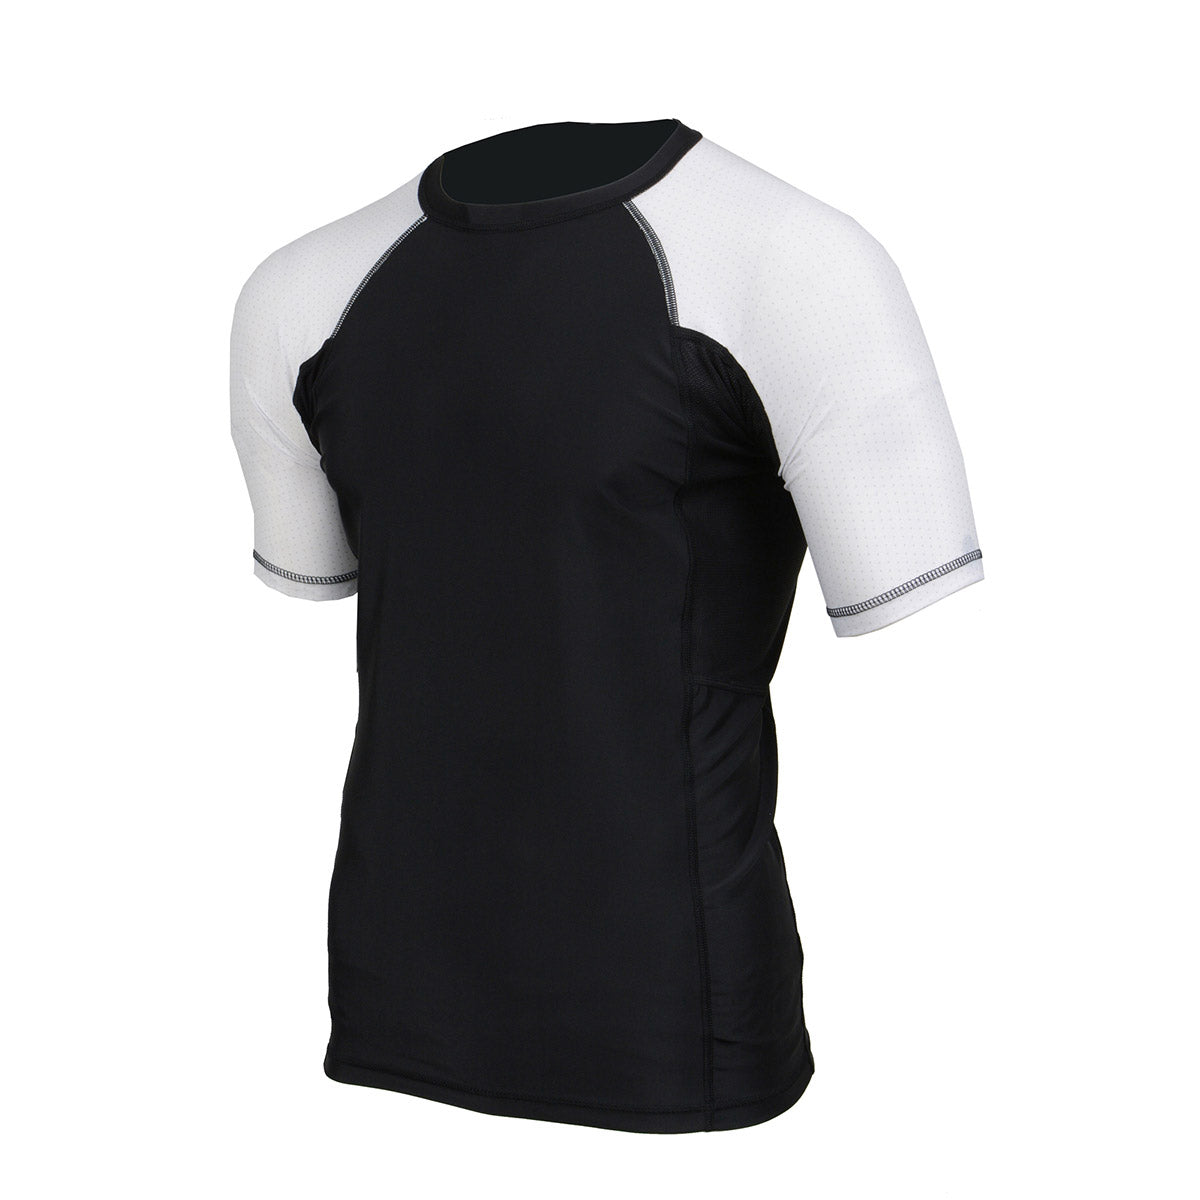 X-Fitness XFM7001 Men's Black and White Short Sleeve Compression Rash Guard Athletic Shirt- MMA, BJJ, Wrestling, Cross Training